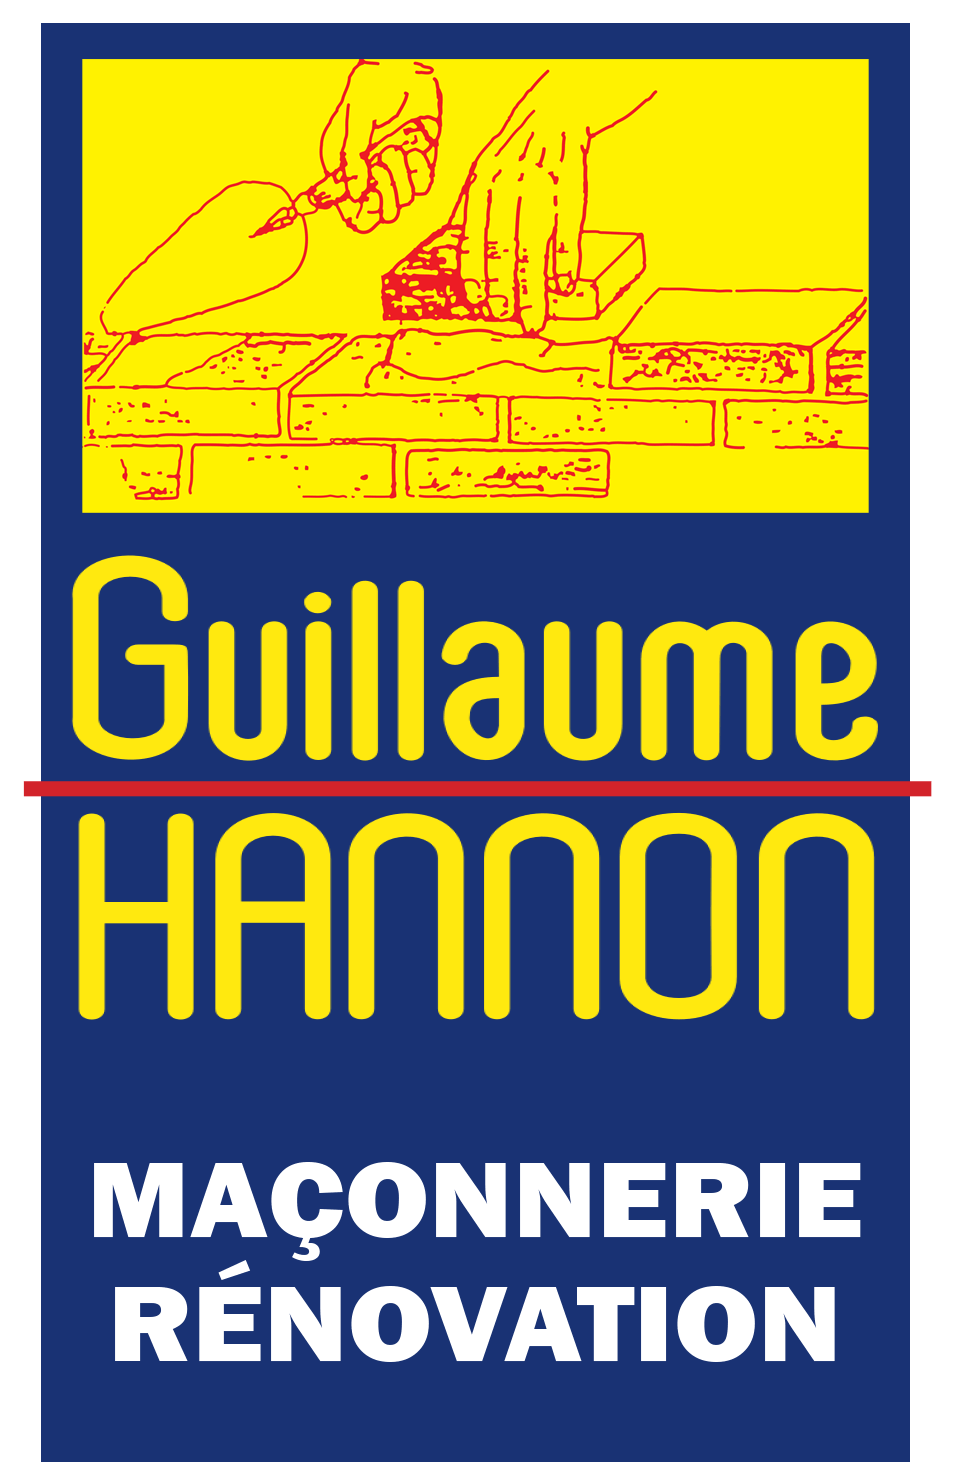 Guillaume HANNON